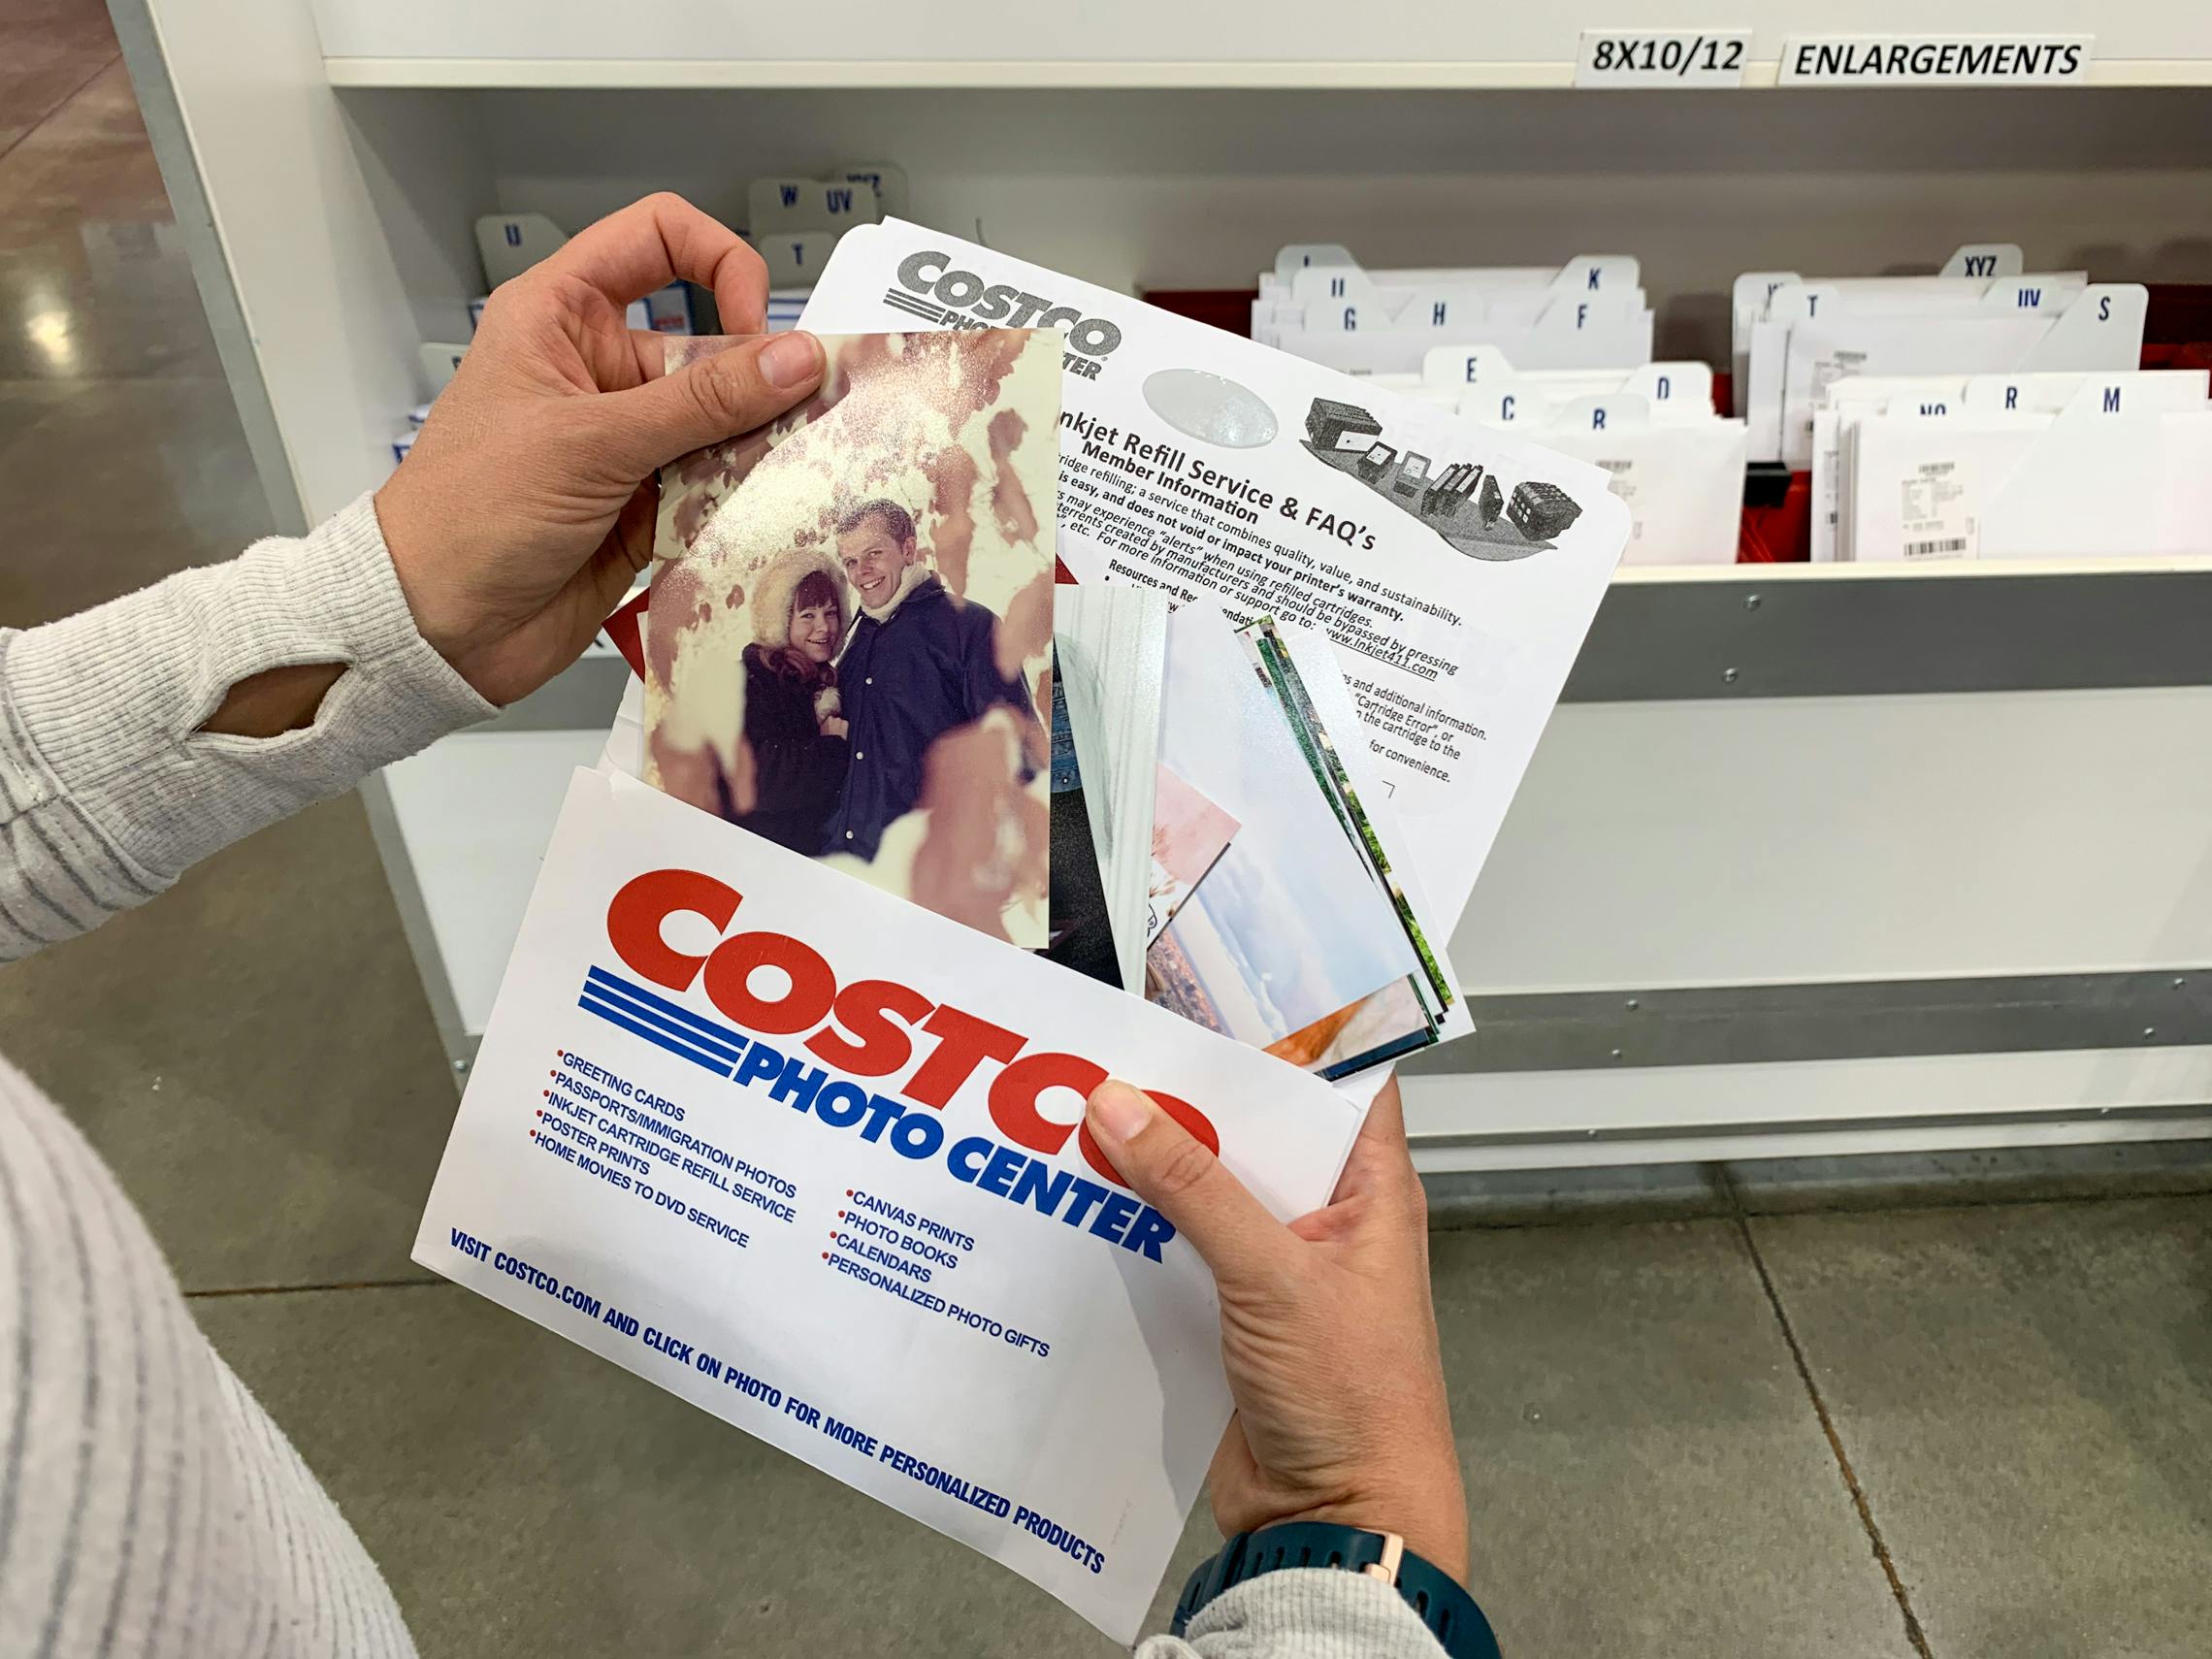 costco photo print sizes and prices